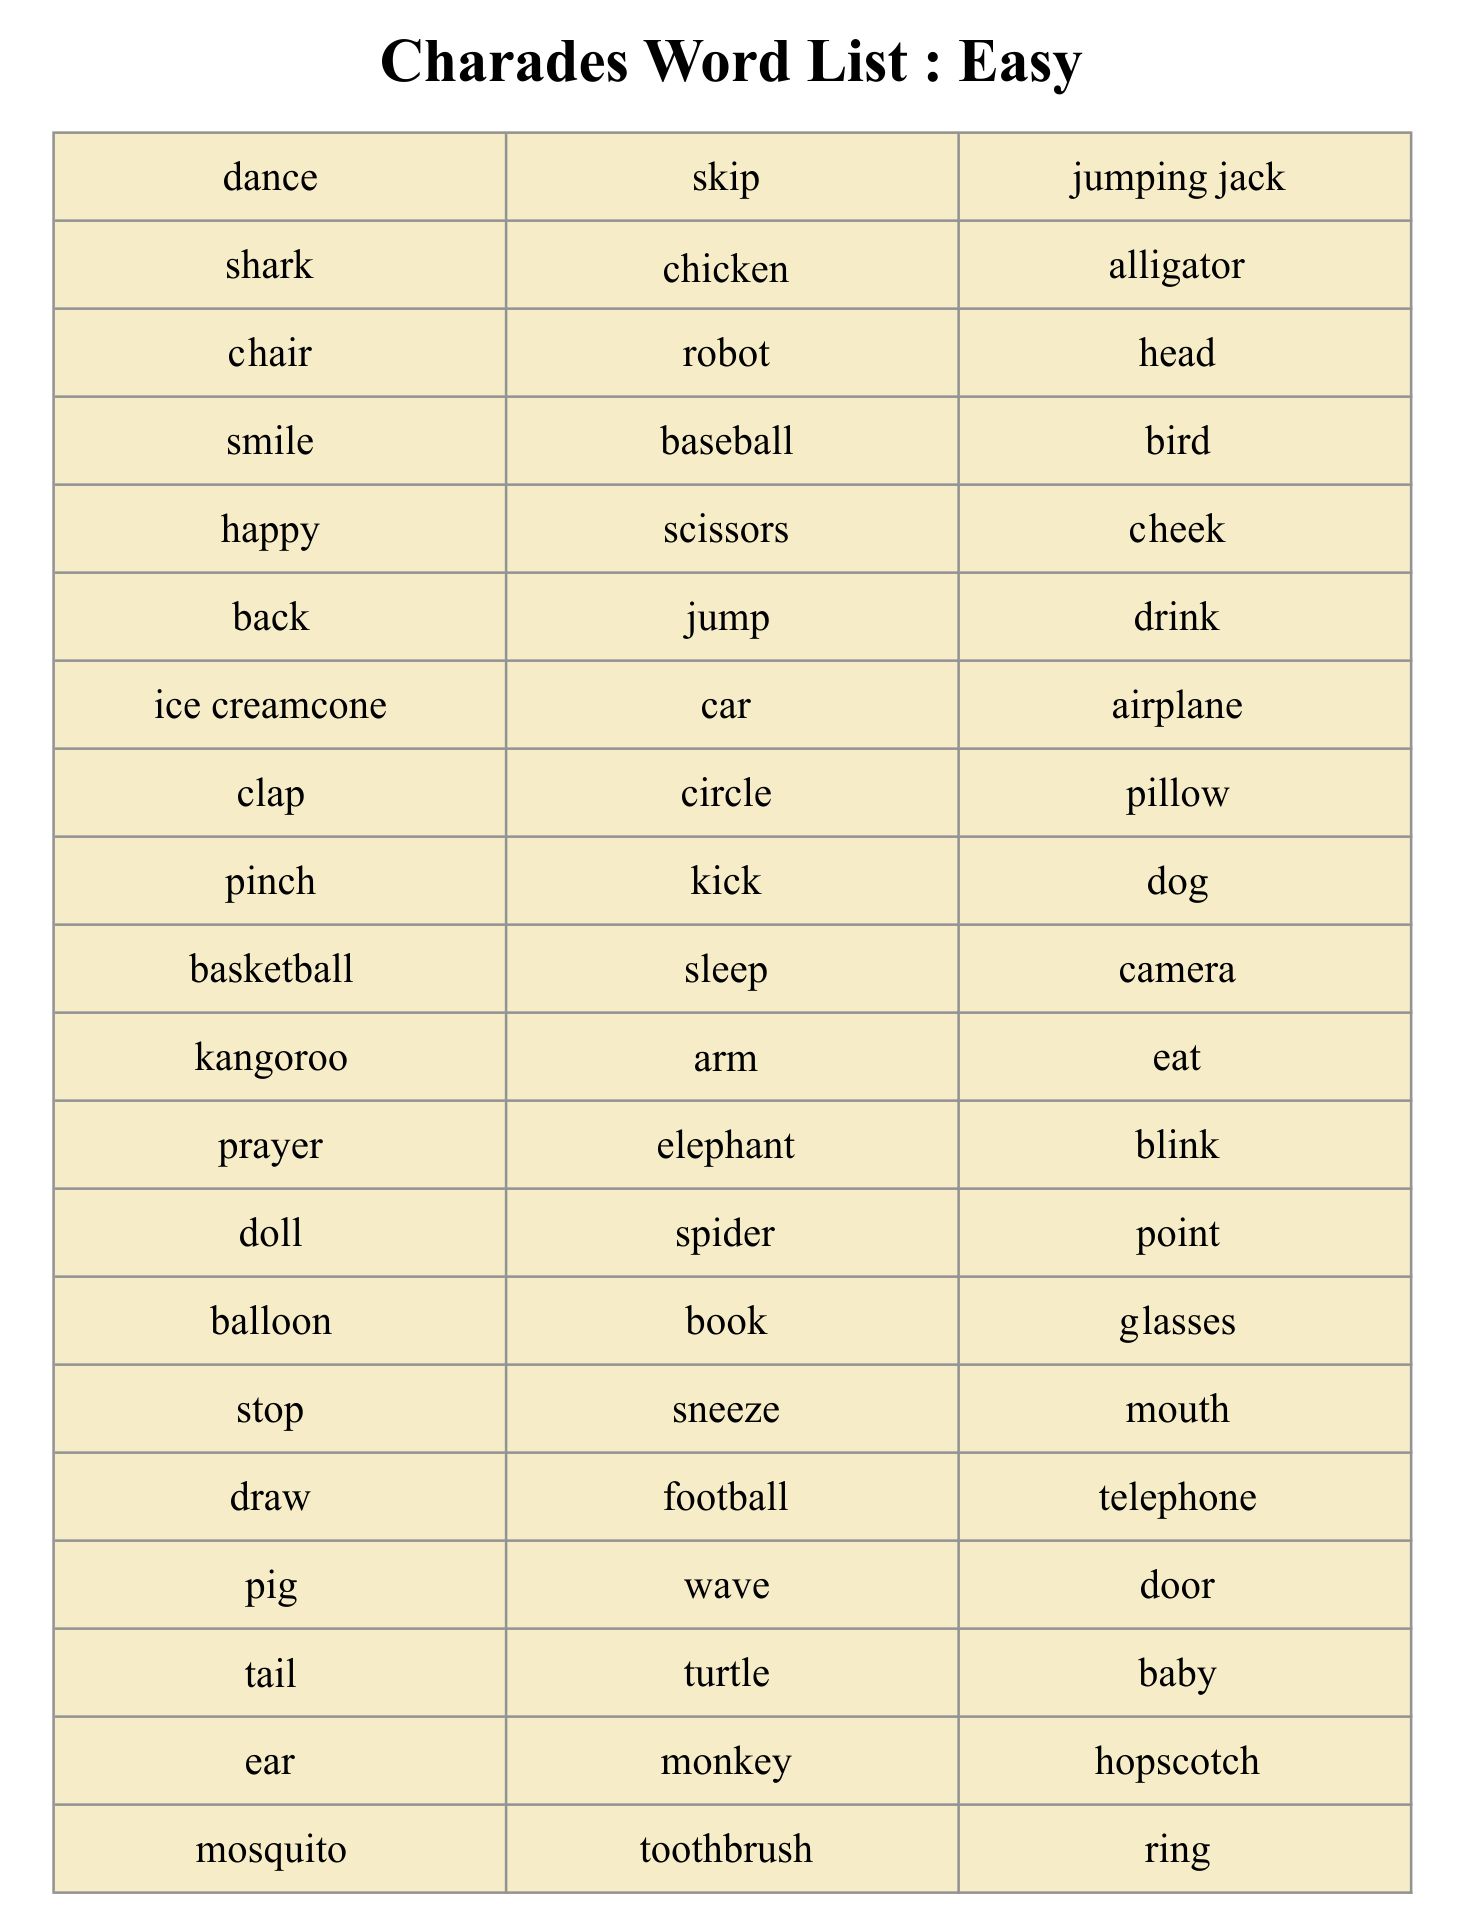 Charades Words List Printable Game